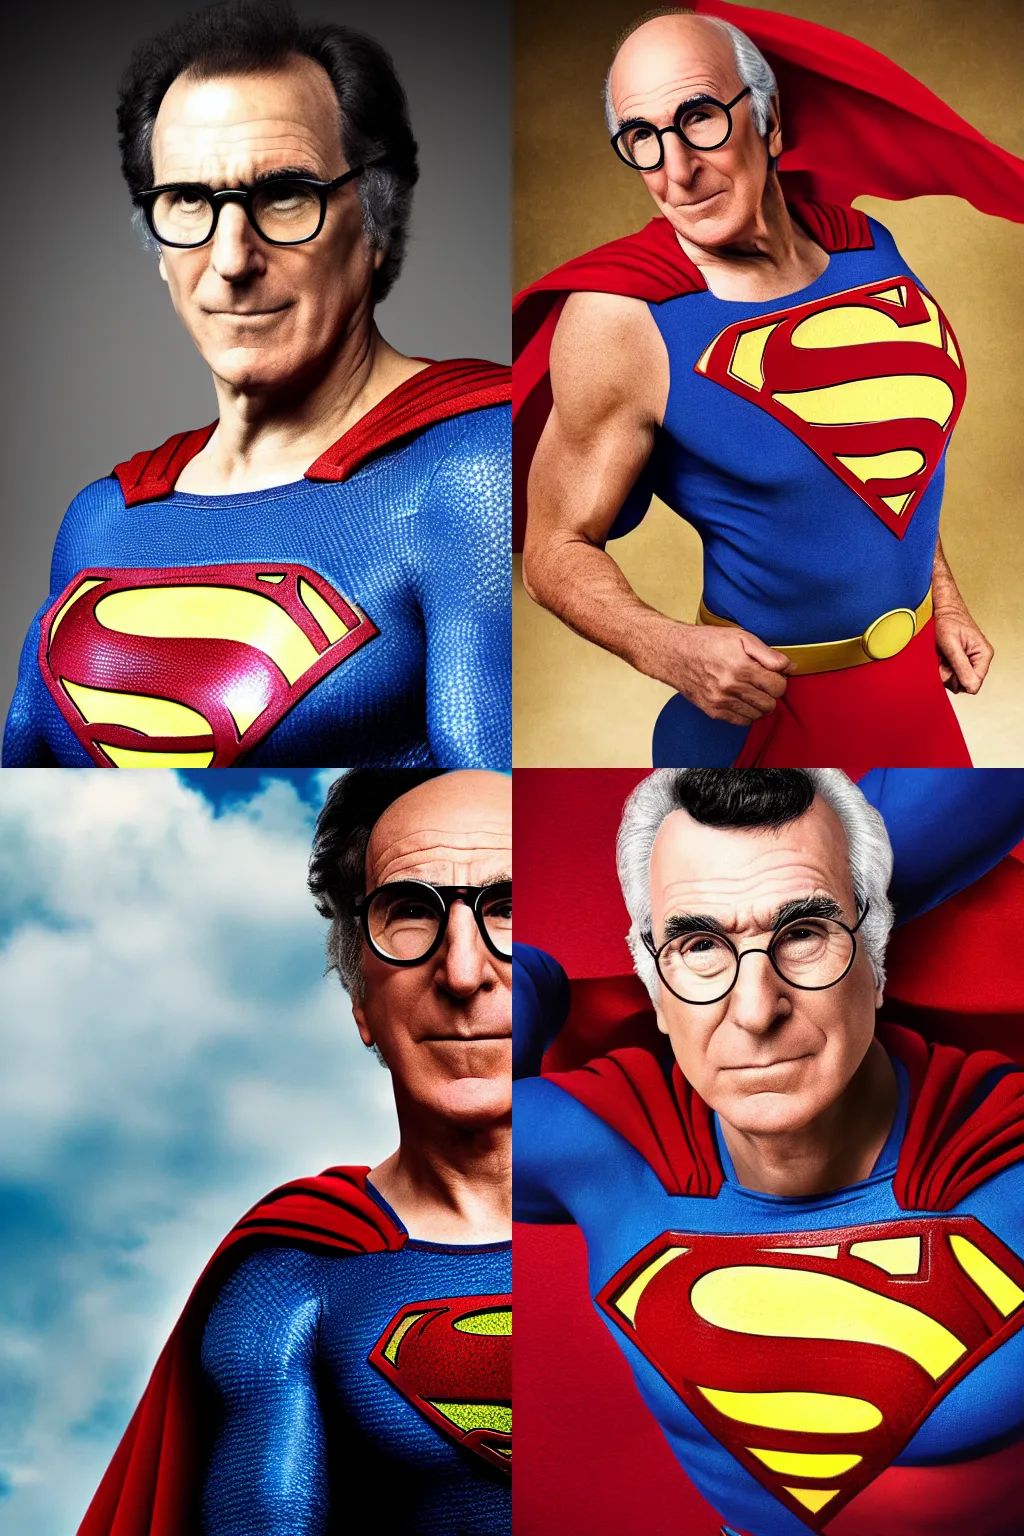 Prompt: Larry David as superman, ultra realistic, high definition portrait photograph